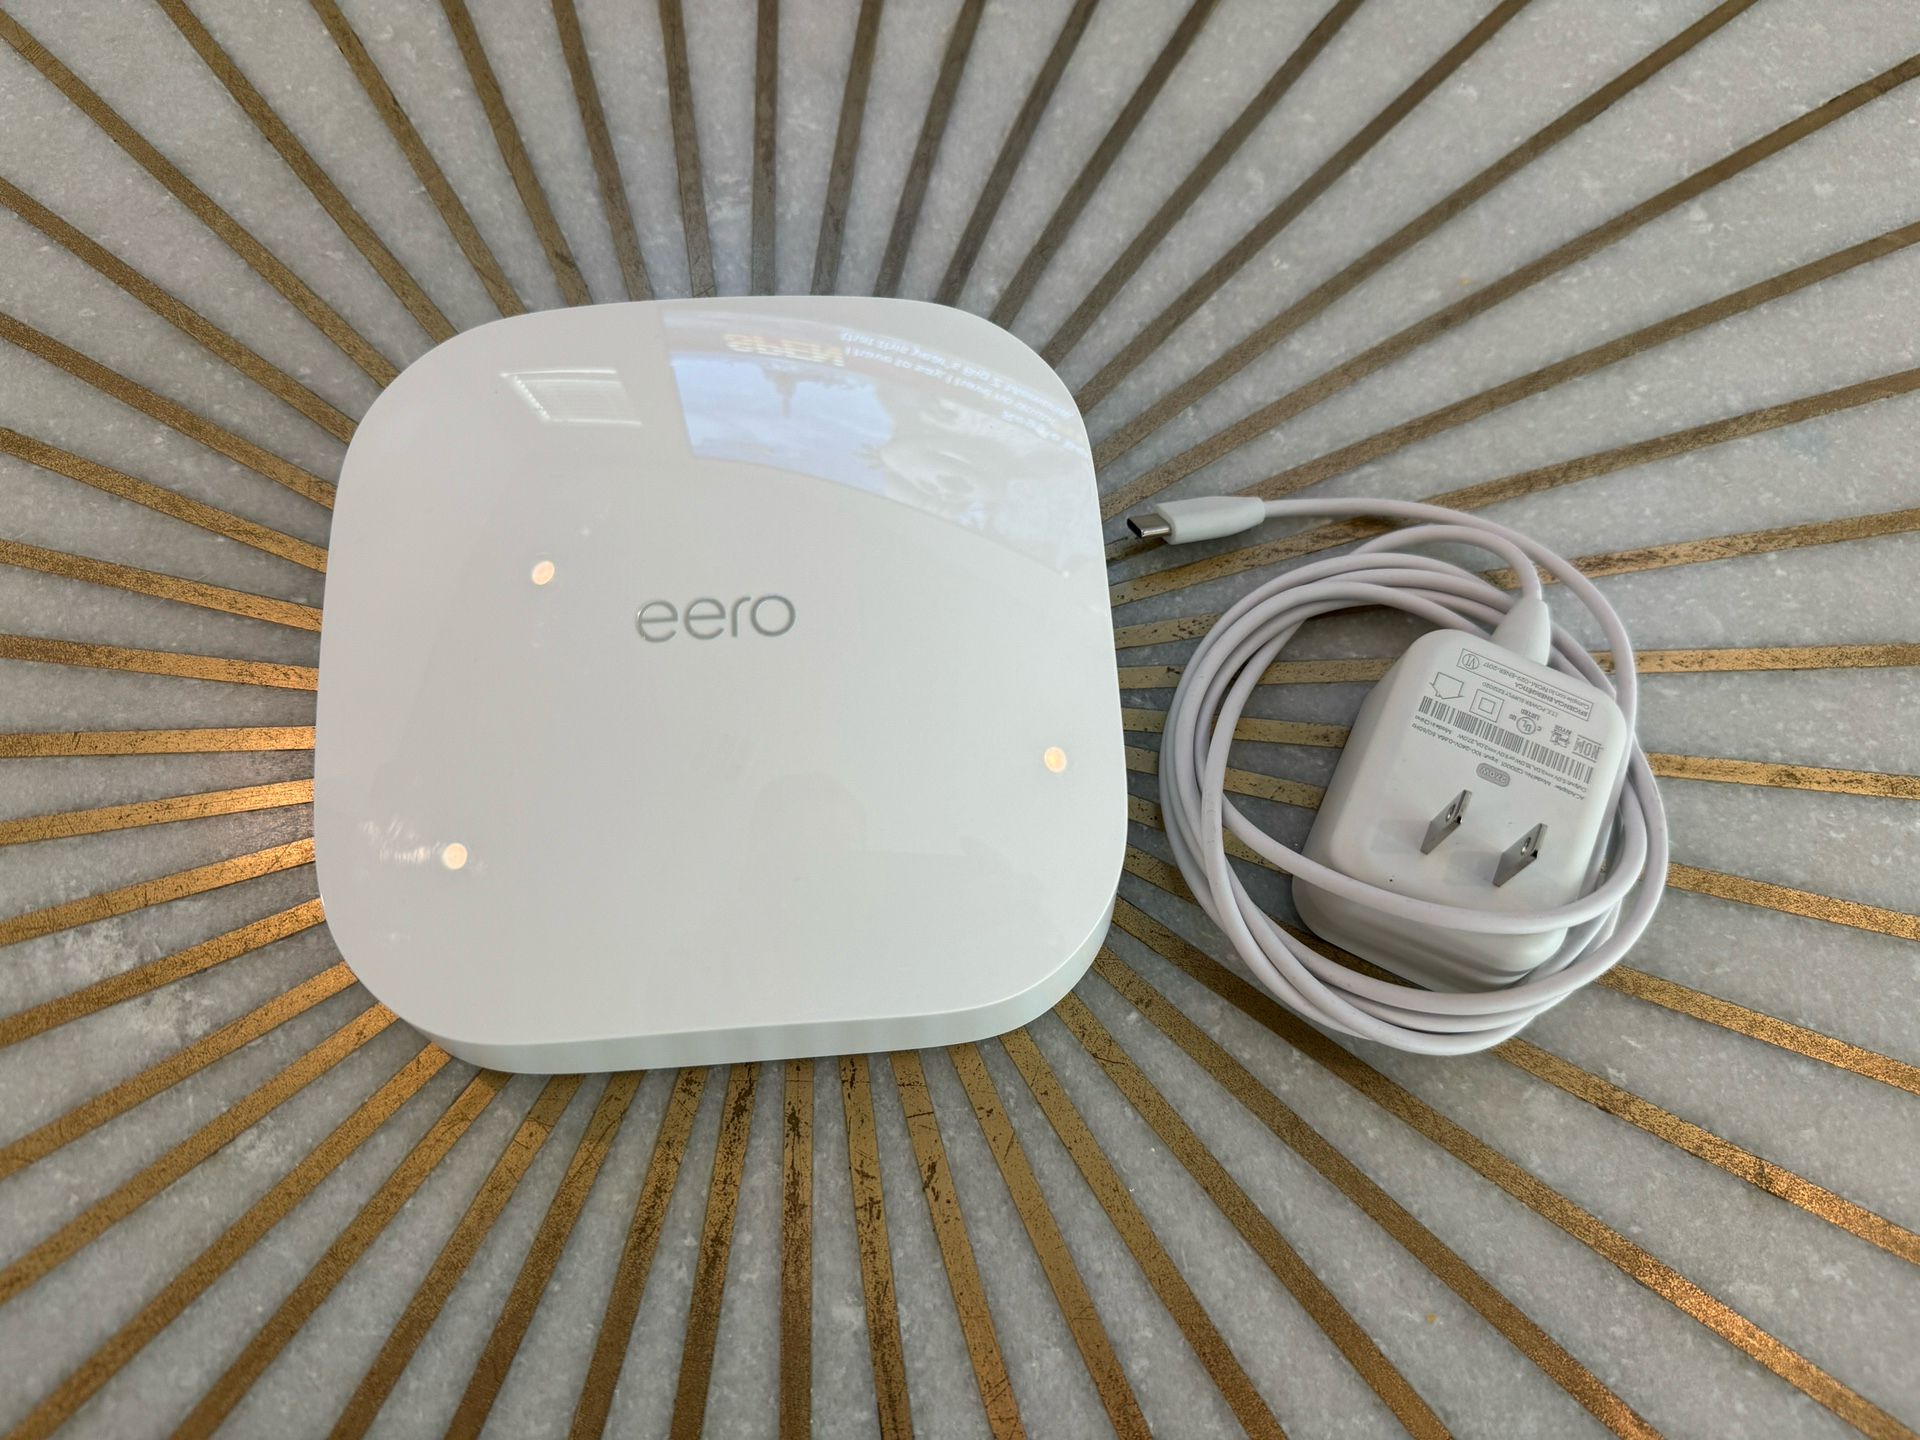 Eero 6 Pro WiFi Mesh Router - Like New Condition